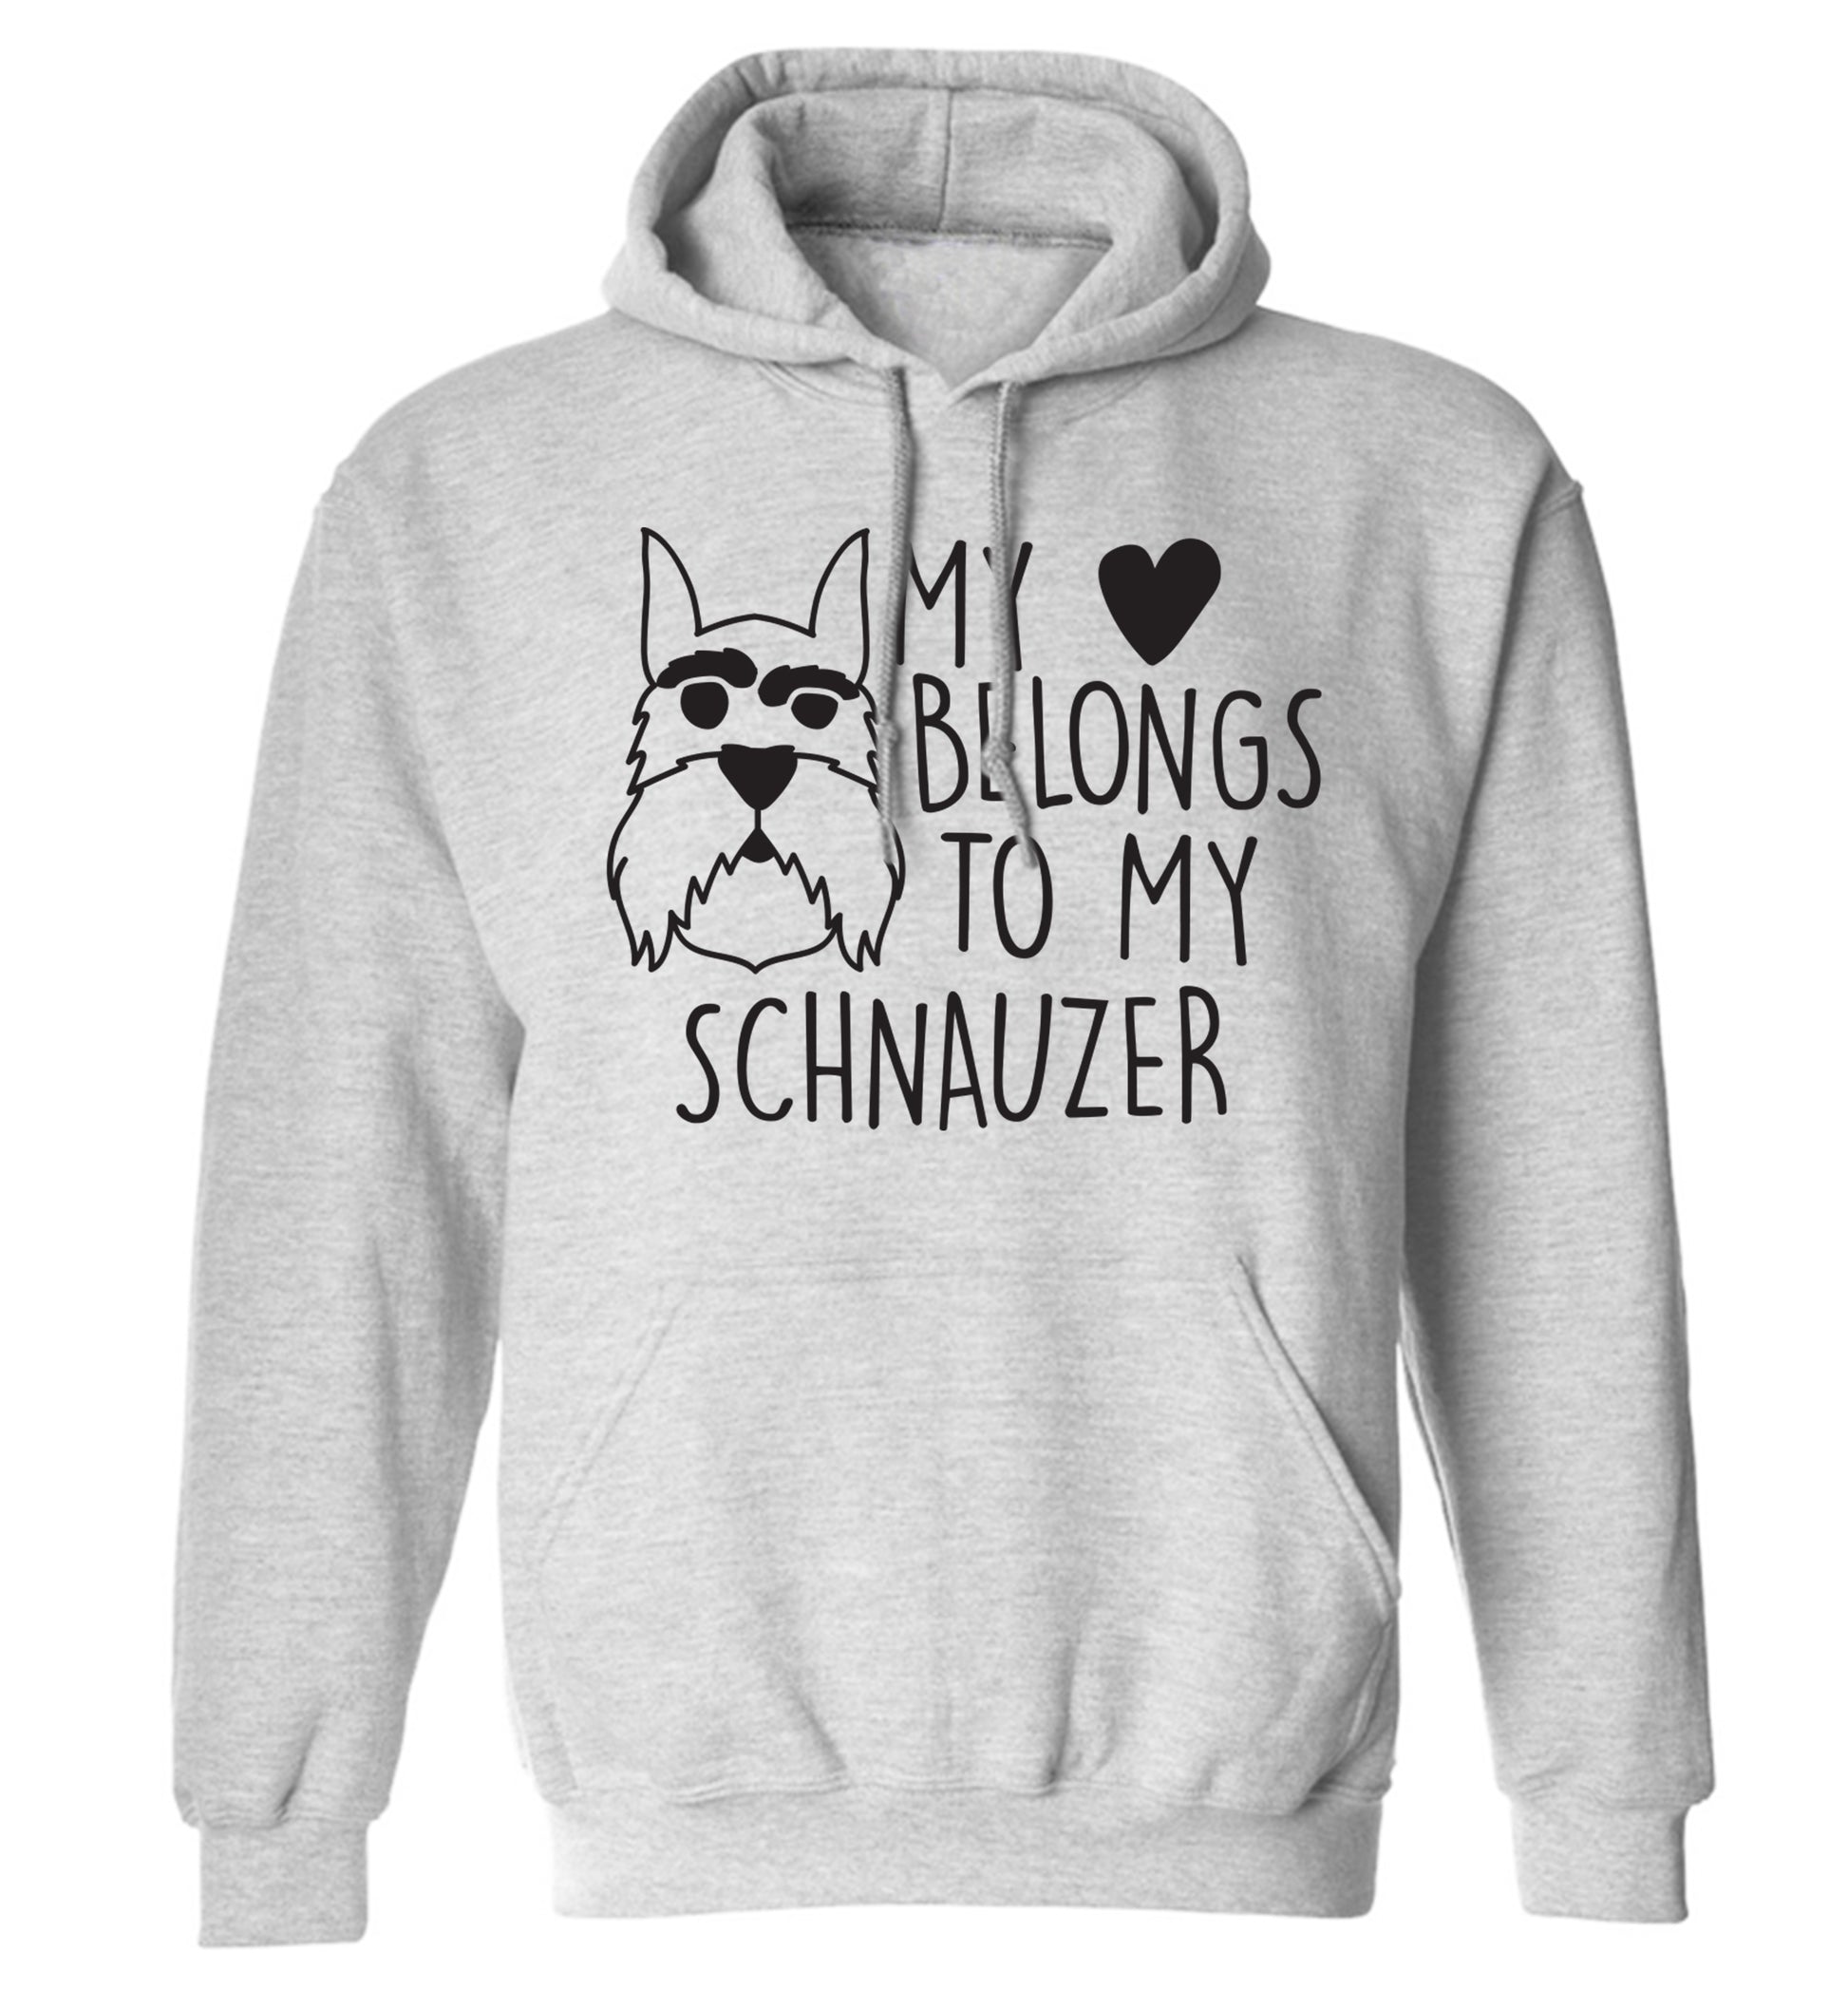 My heart belongs to my schnauzer adults unisex grey hoodie 2XL